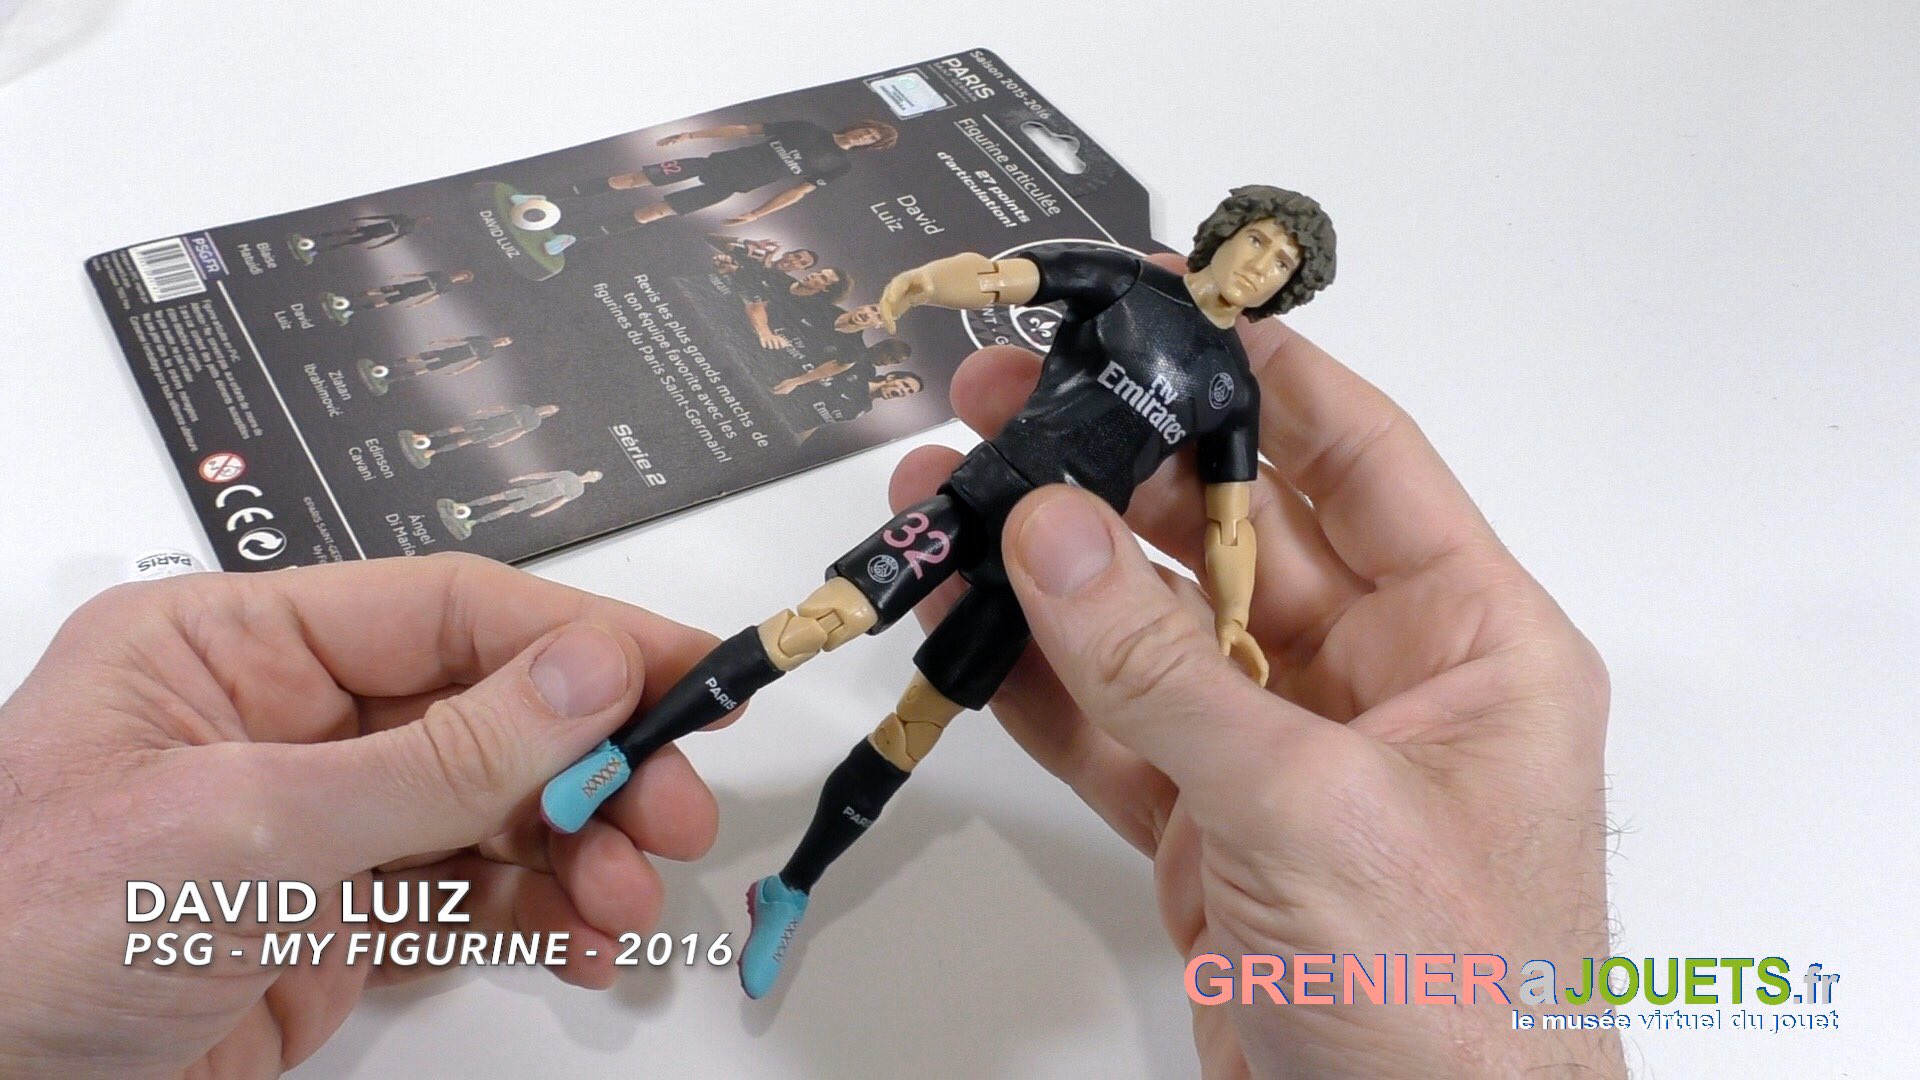 Grenierajouets.fr on X: Figurine articulée du footballeur David